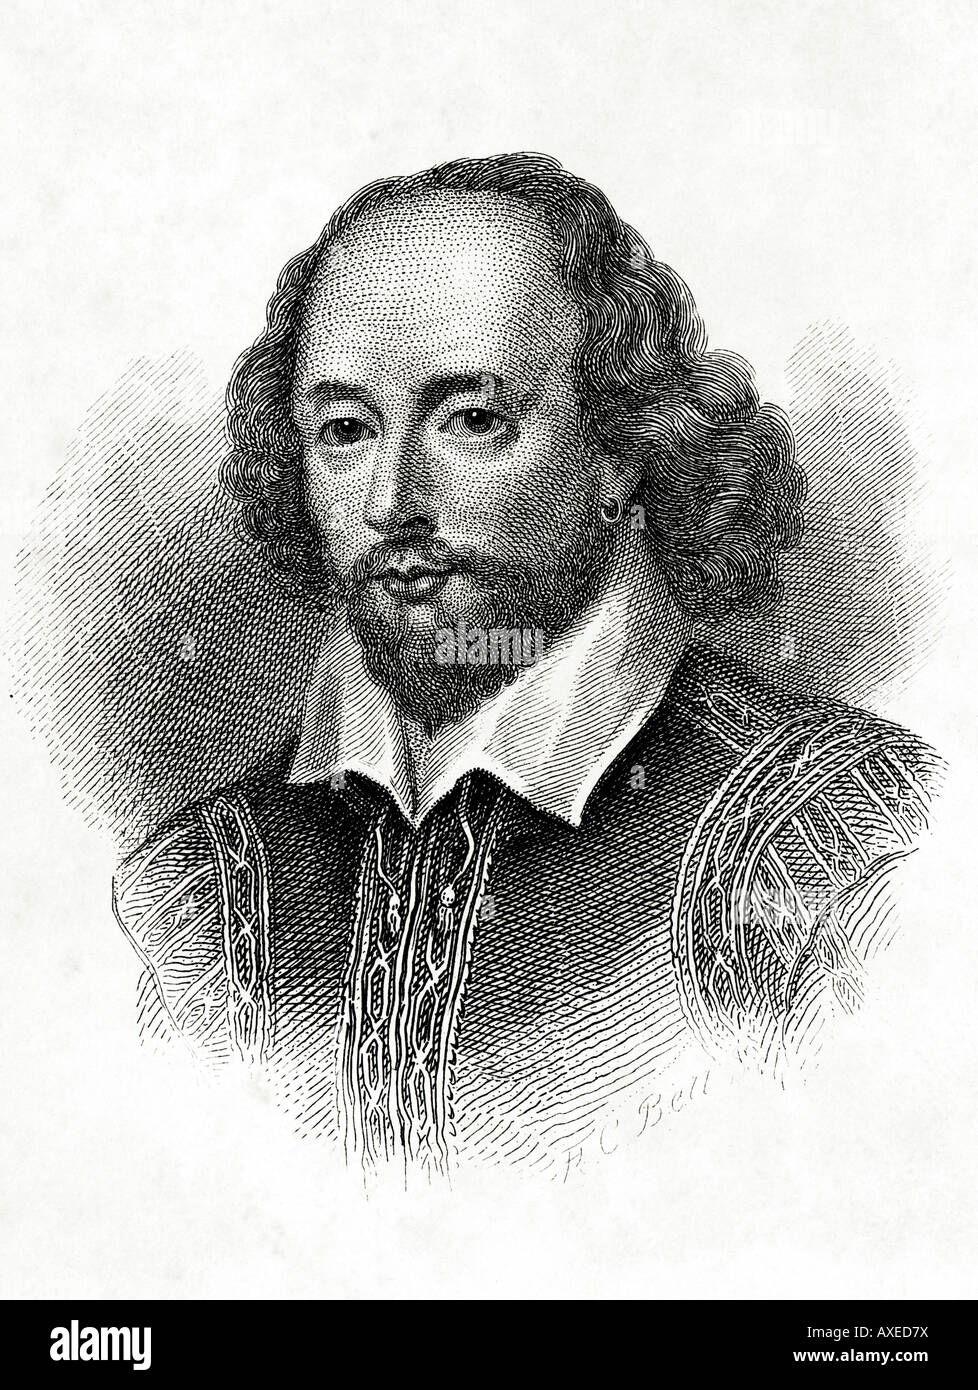 Aguafuerte victoriana de William Shakespeare SÓLO PARA USO EDITORIAL Foto de stock